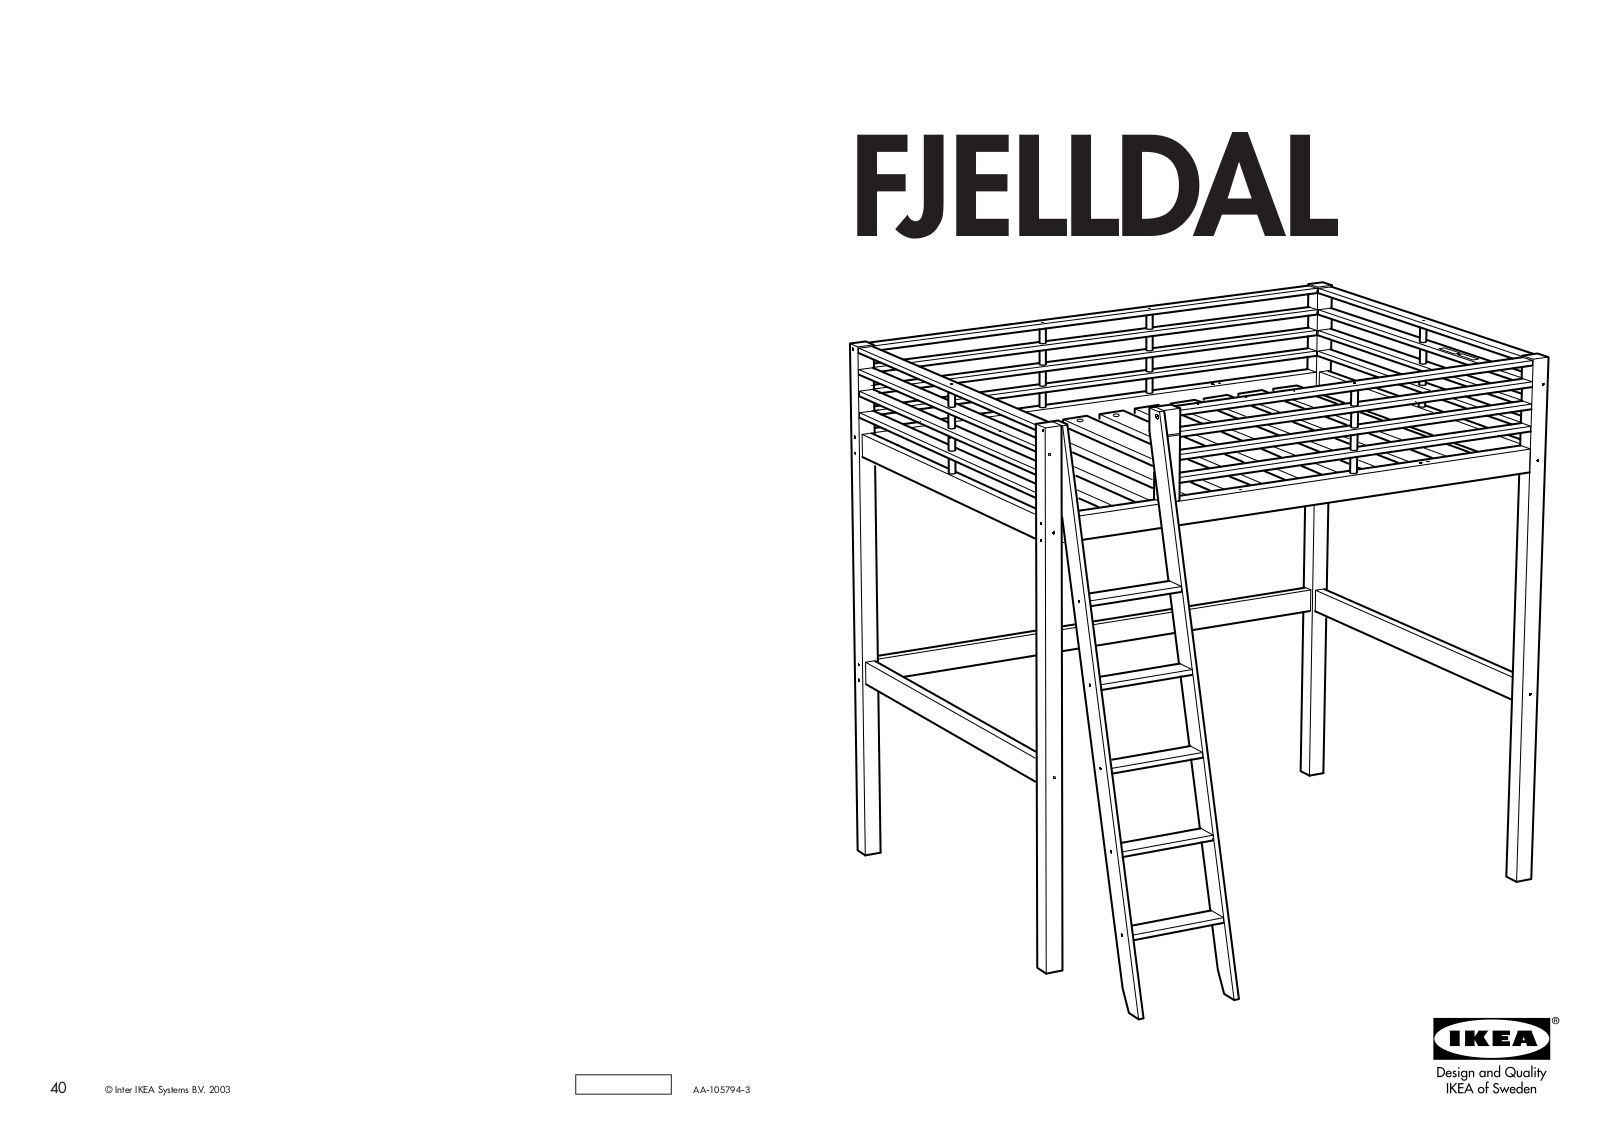 IKEA FJELLDAL FULL LOFT BED User Manual